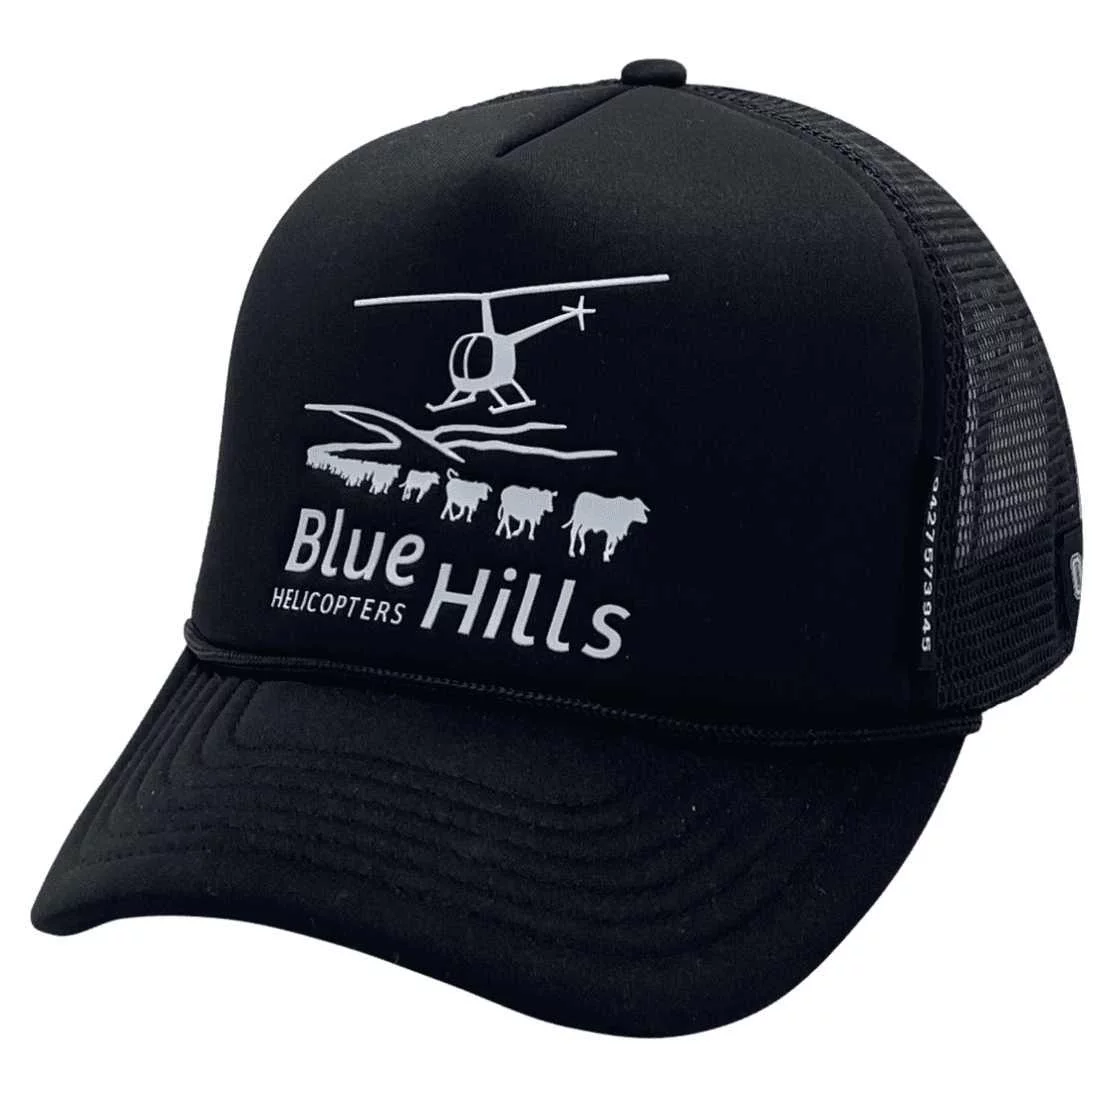 Blue Hills Helicopters Winton QLD LP Foamie Aussie Trucker Hat with Australian Head Fit Crown Size